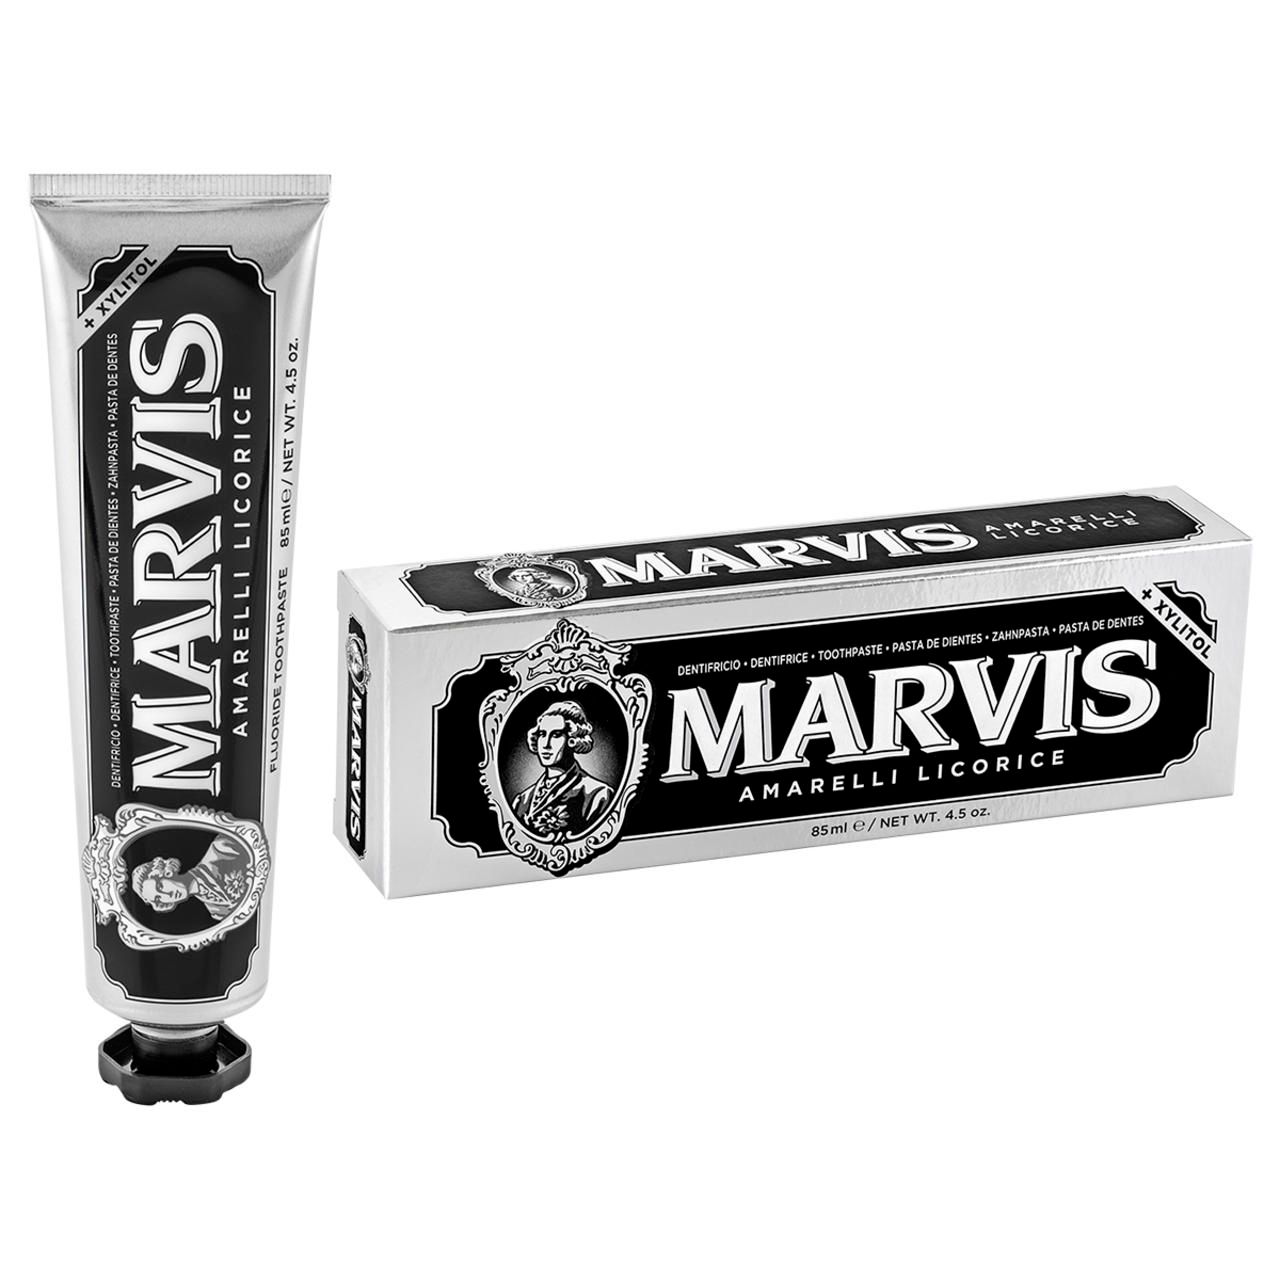 Marvis, Amarelli Licorice Mint Toothpaste